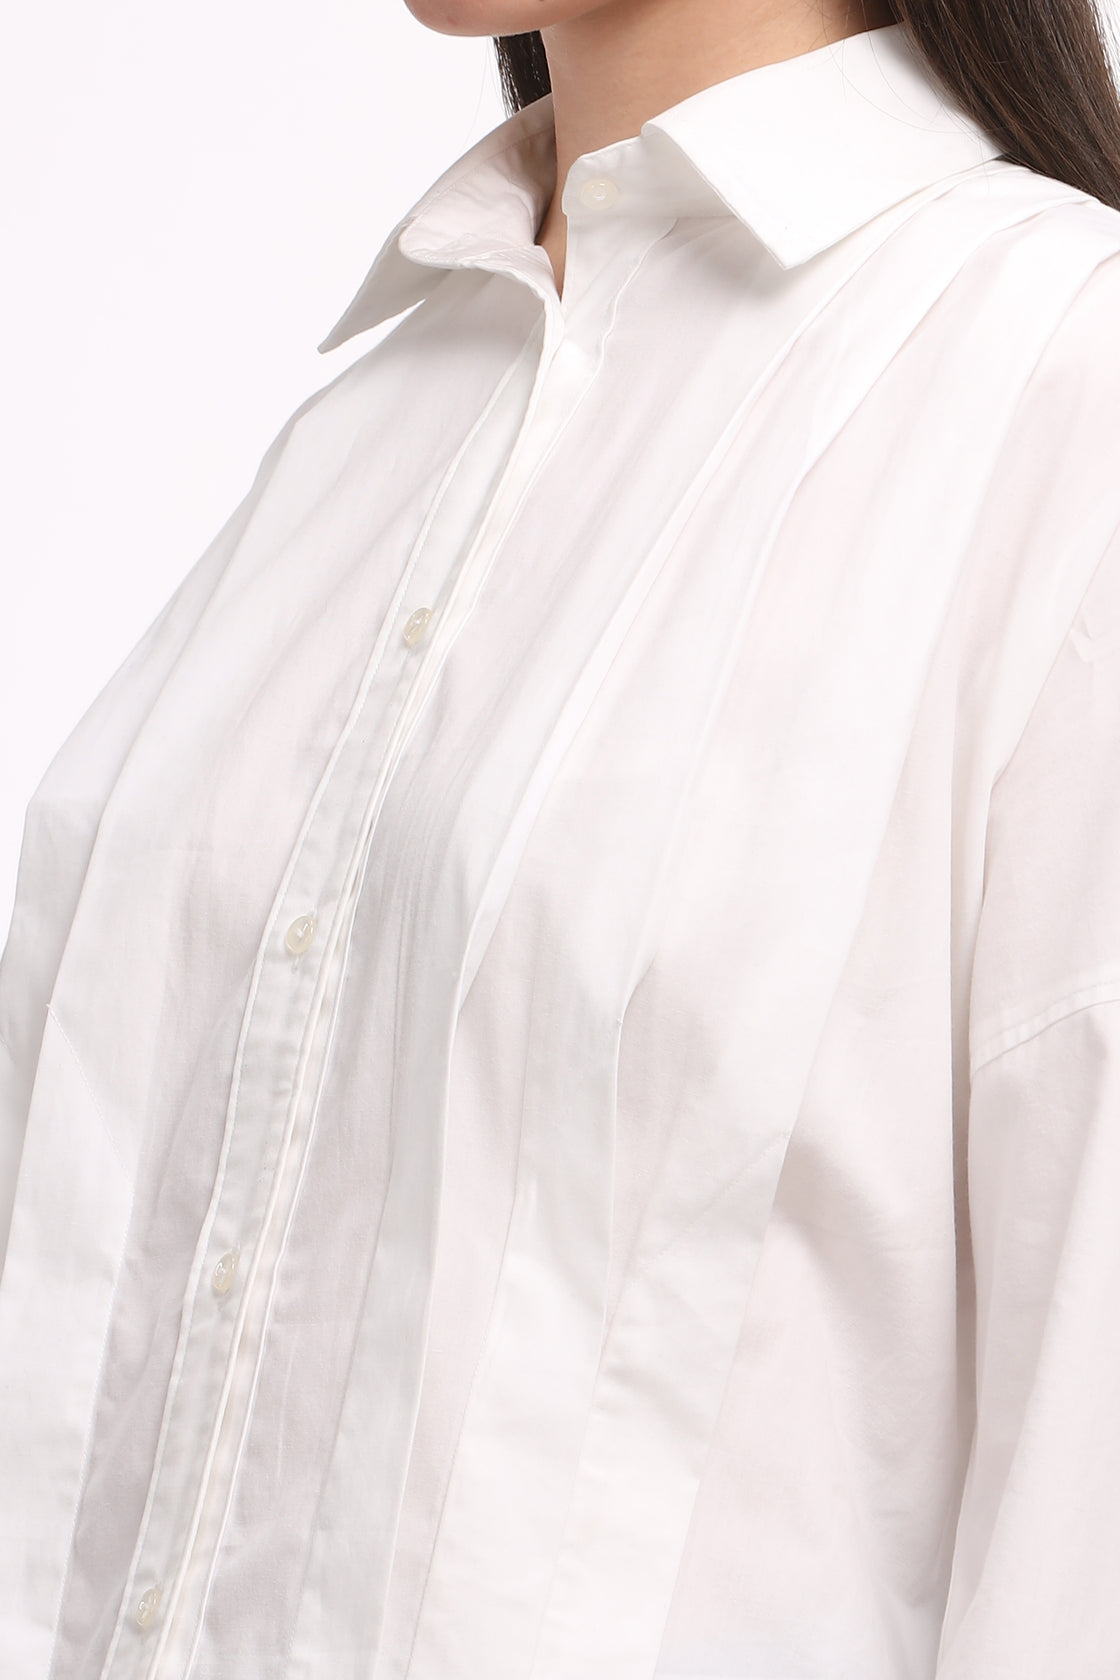 Sia Pleated White Shirt